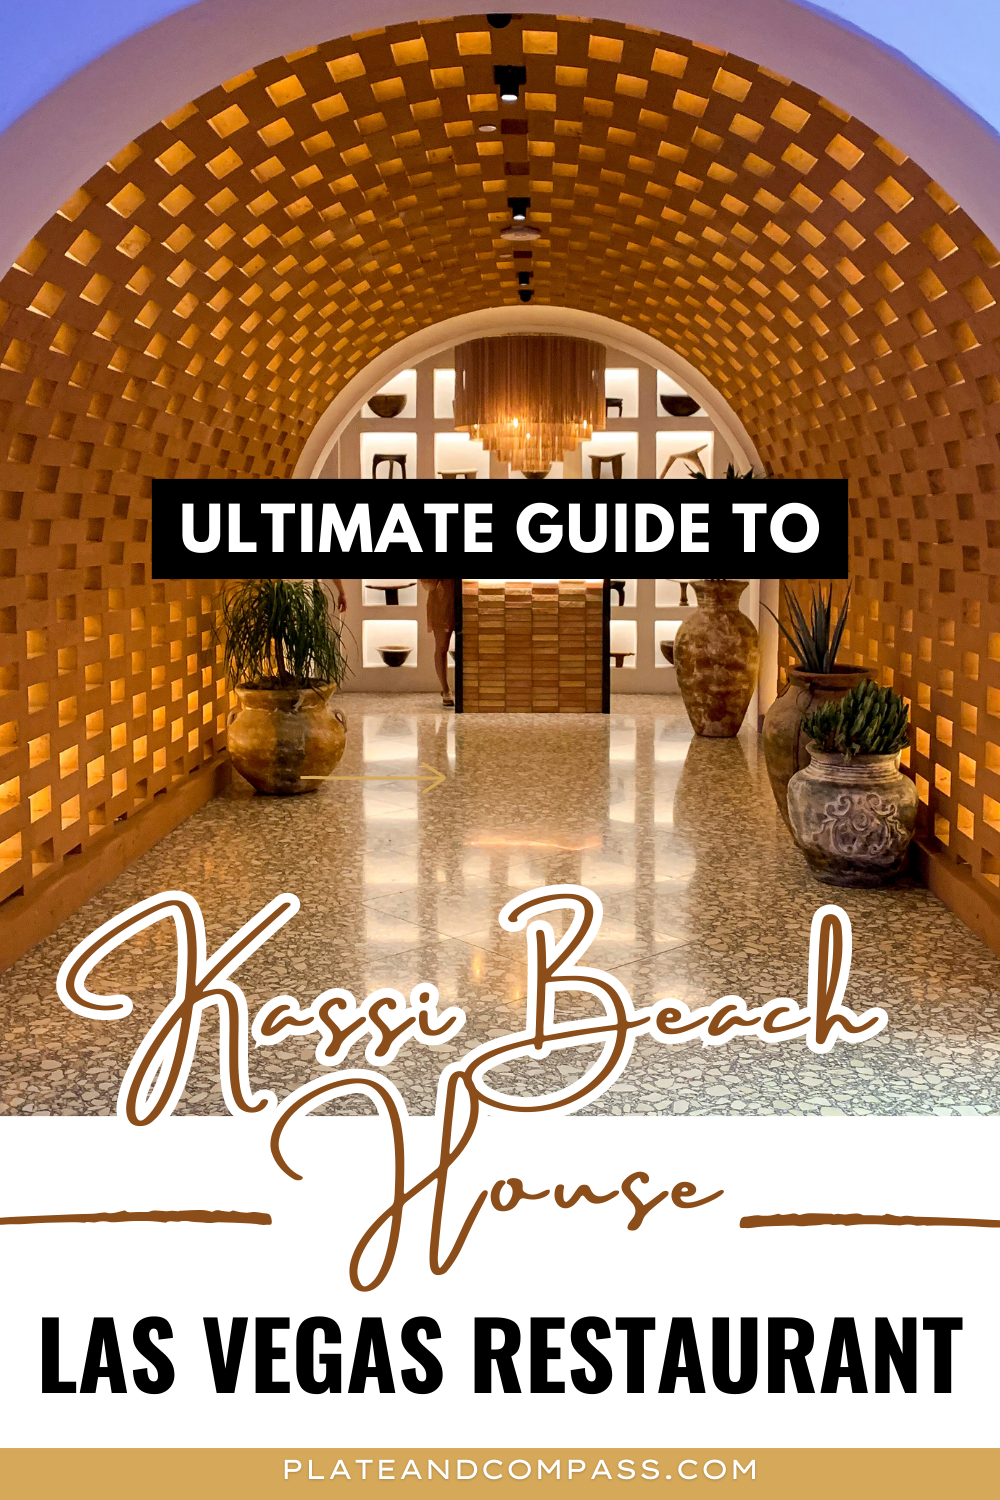 Ultimate Guide to Kassi Beach House Las Vegas Restaurant